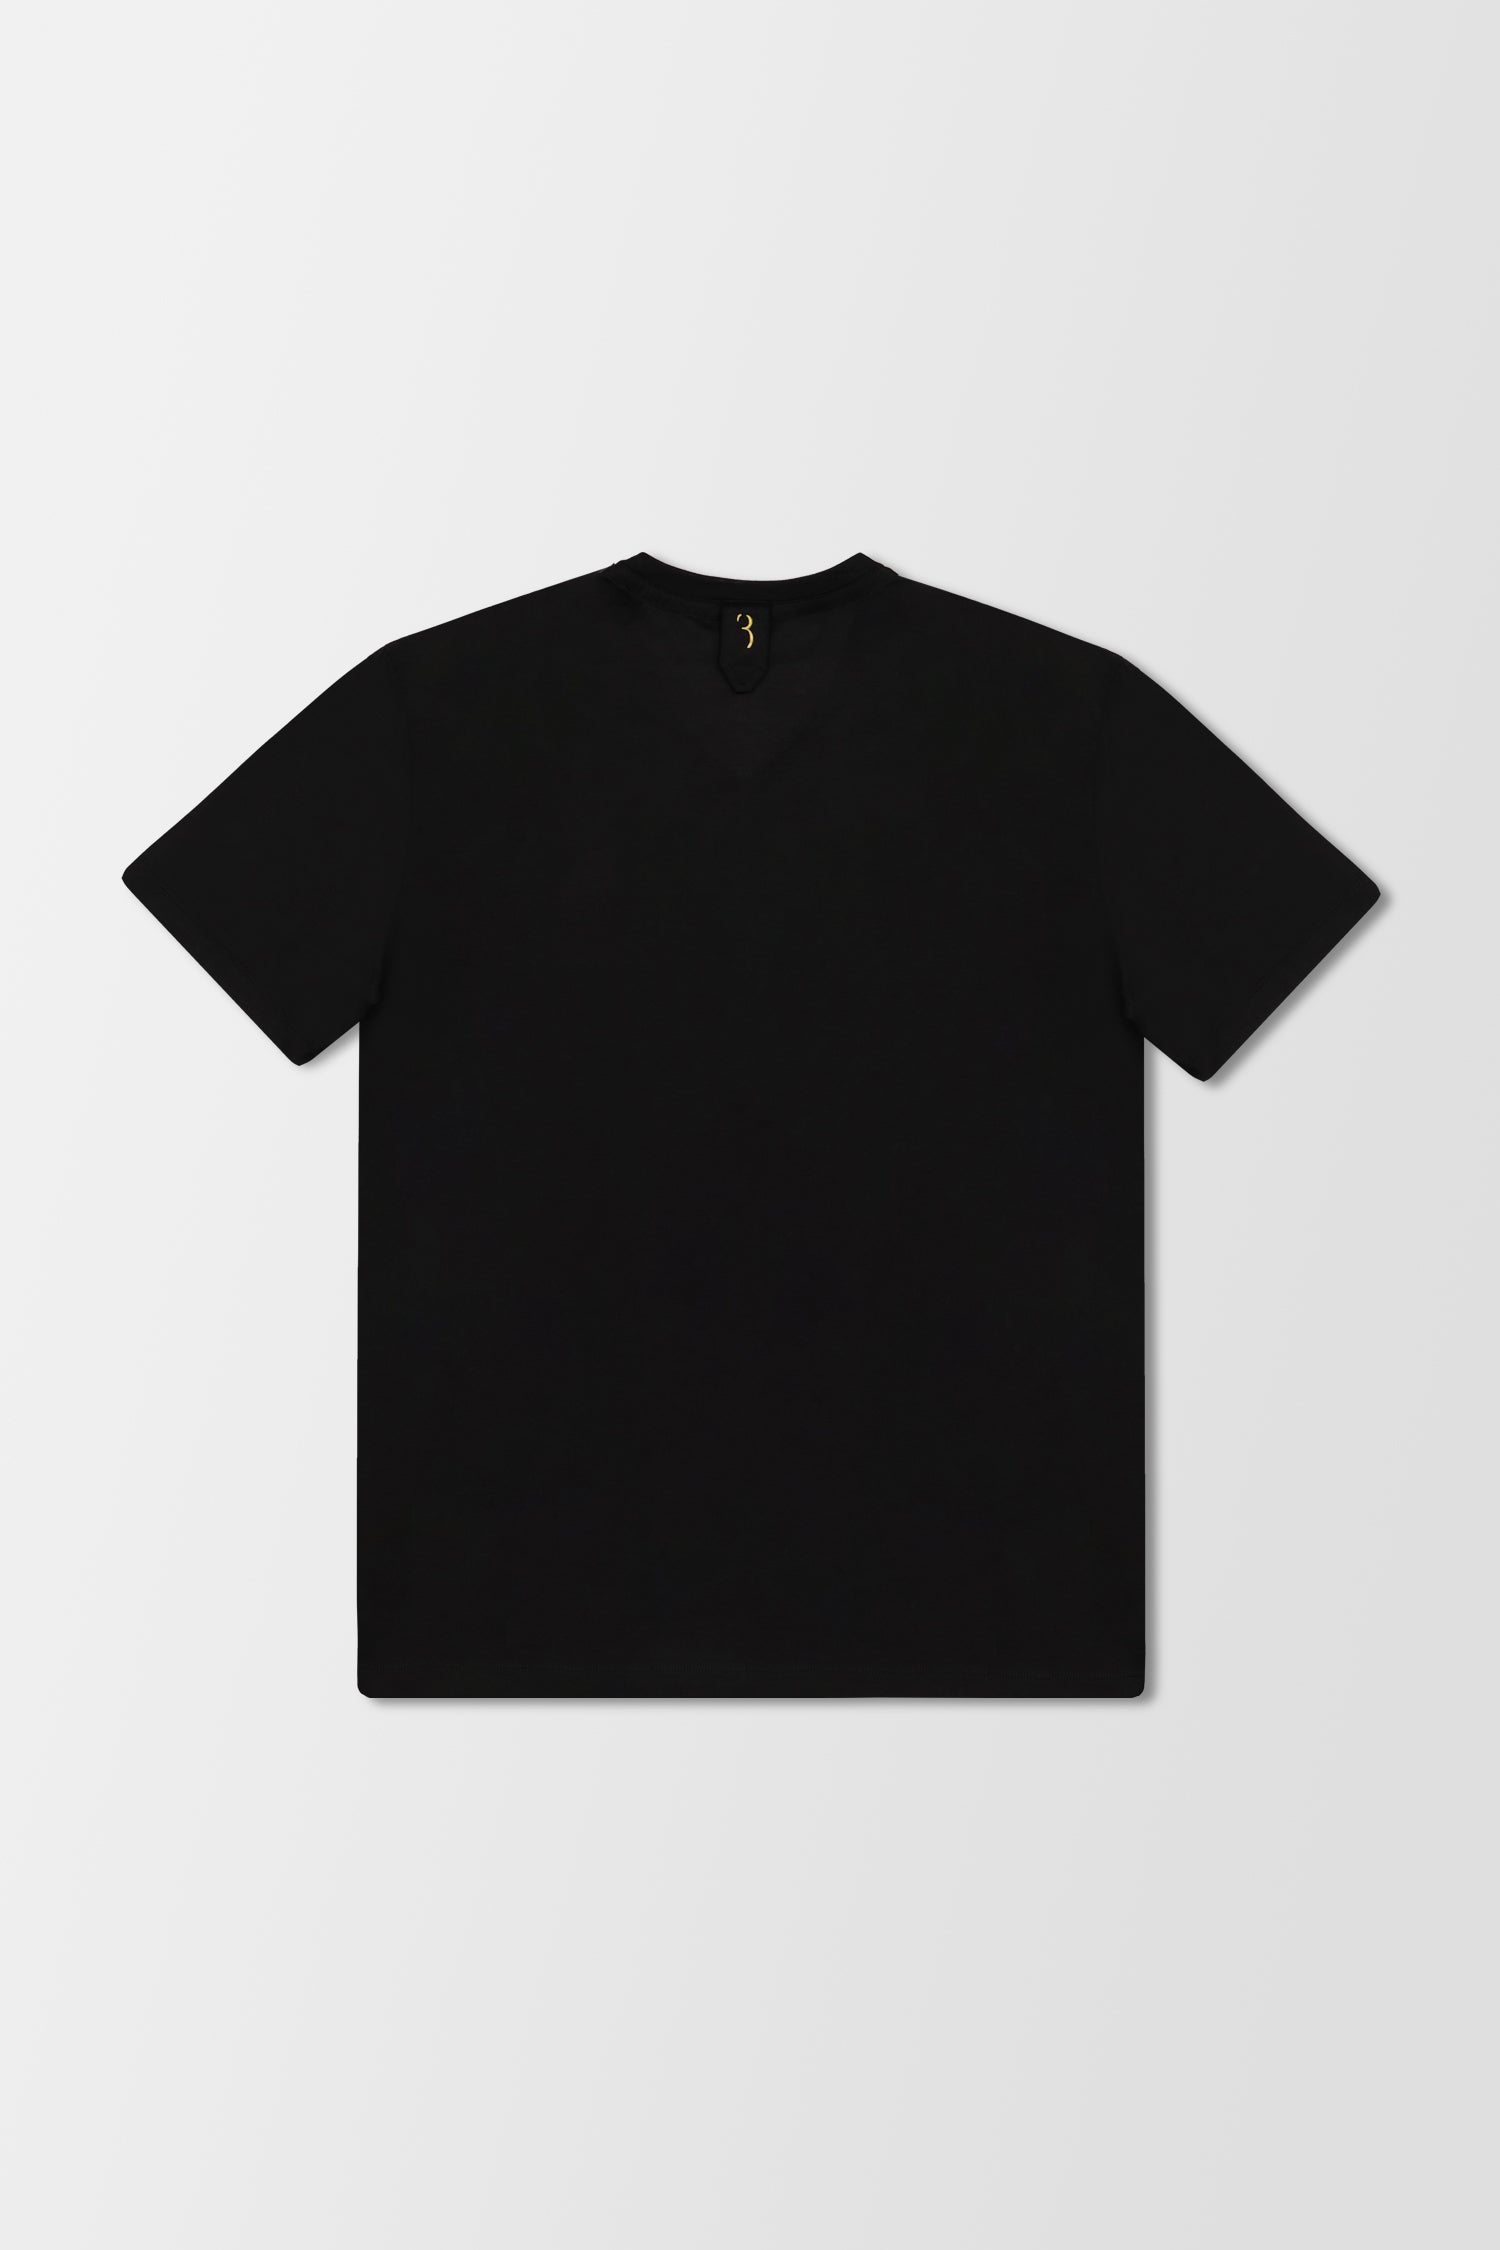 Billionaire Black Crest V-Neck T-Shirt